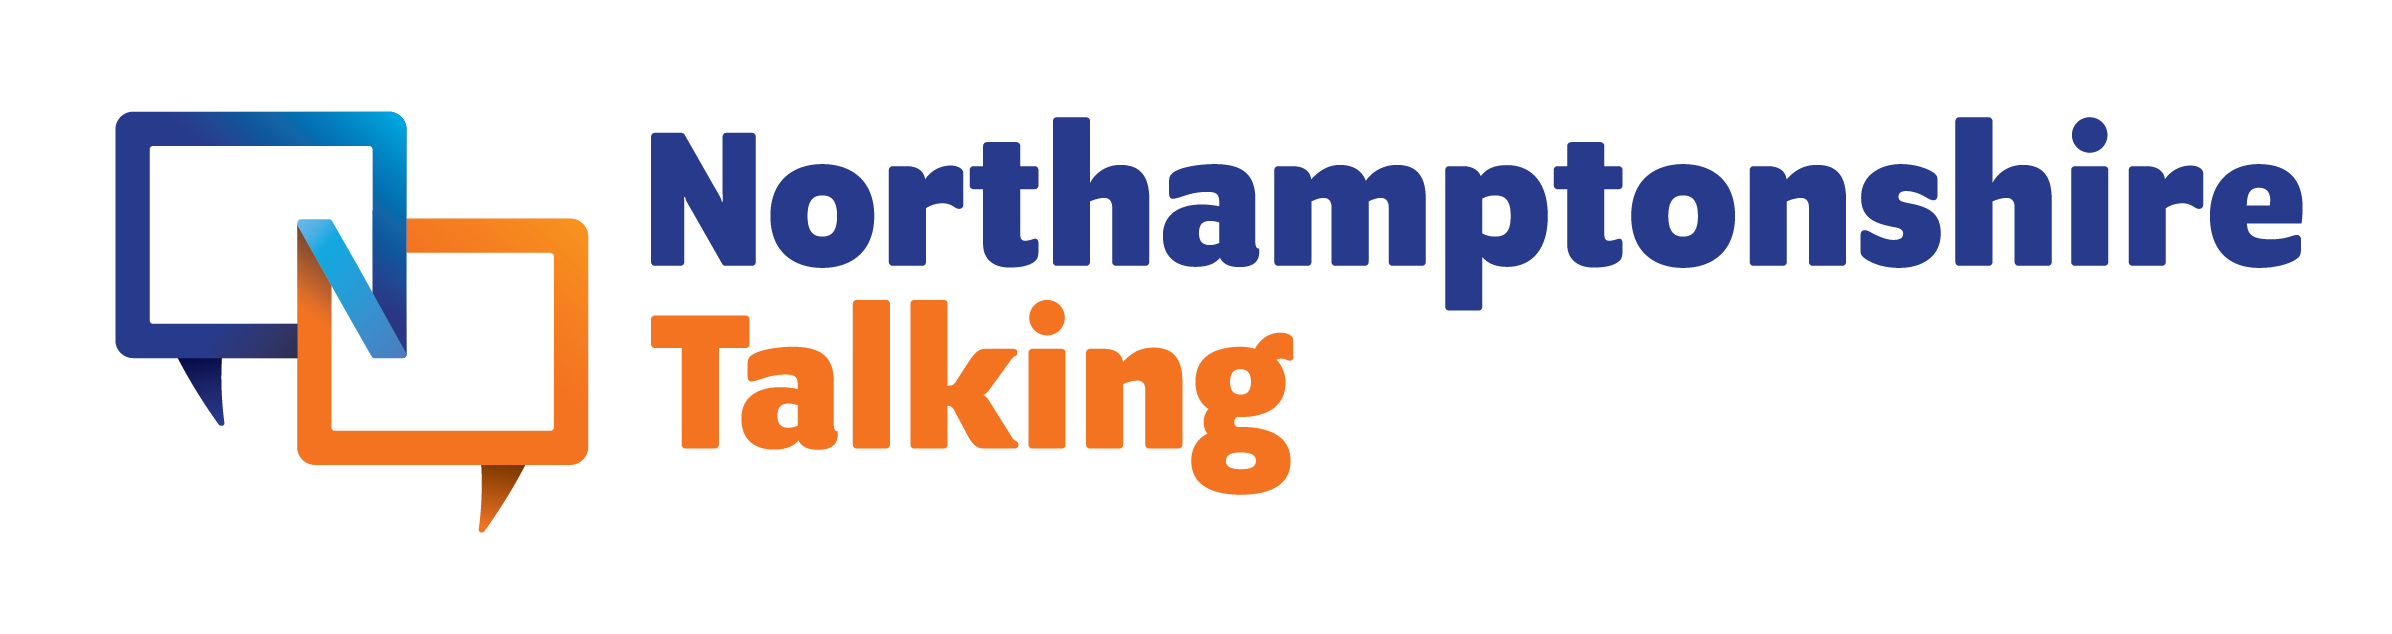 Northamptonshire Talking logo